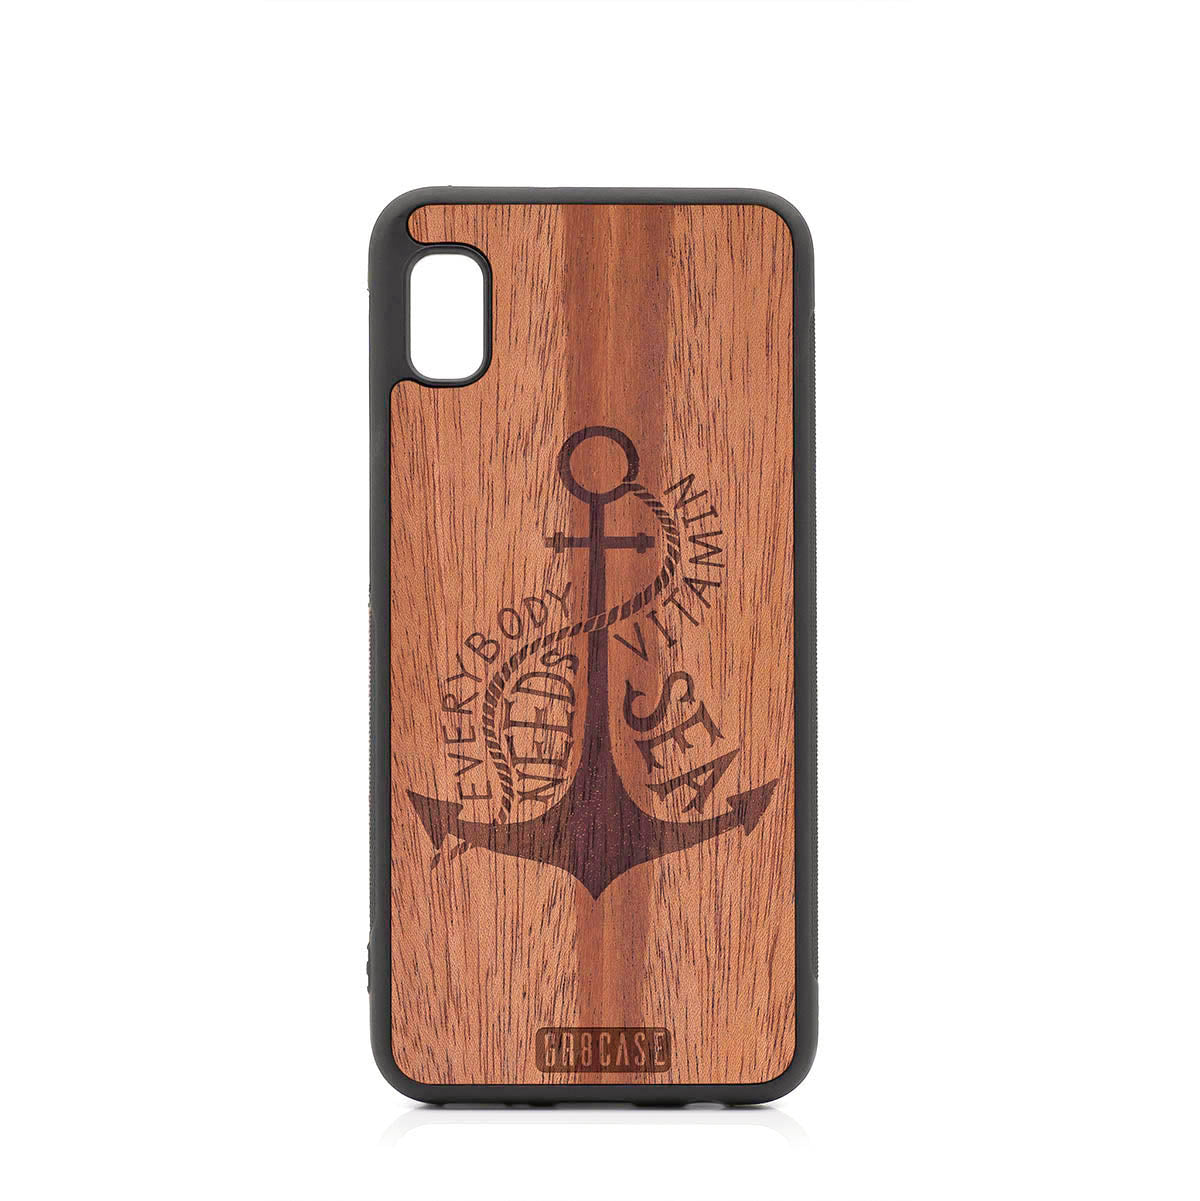 Everybody Needs Vitamin Sea (Anchor) Design Wood Case For Samsung Galaxy A10E by GR8CASE